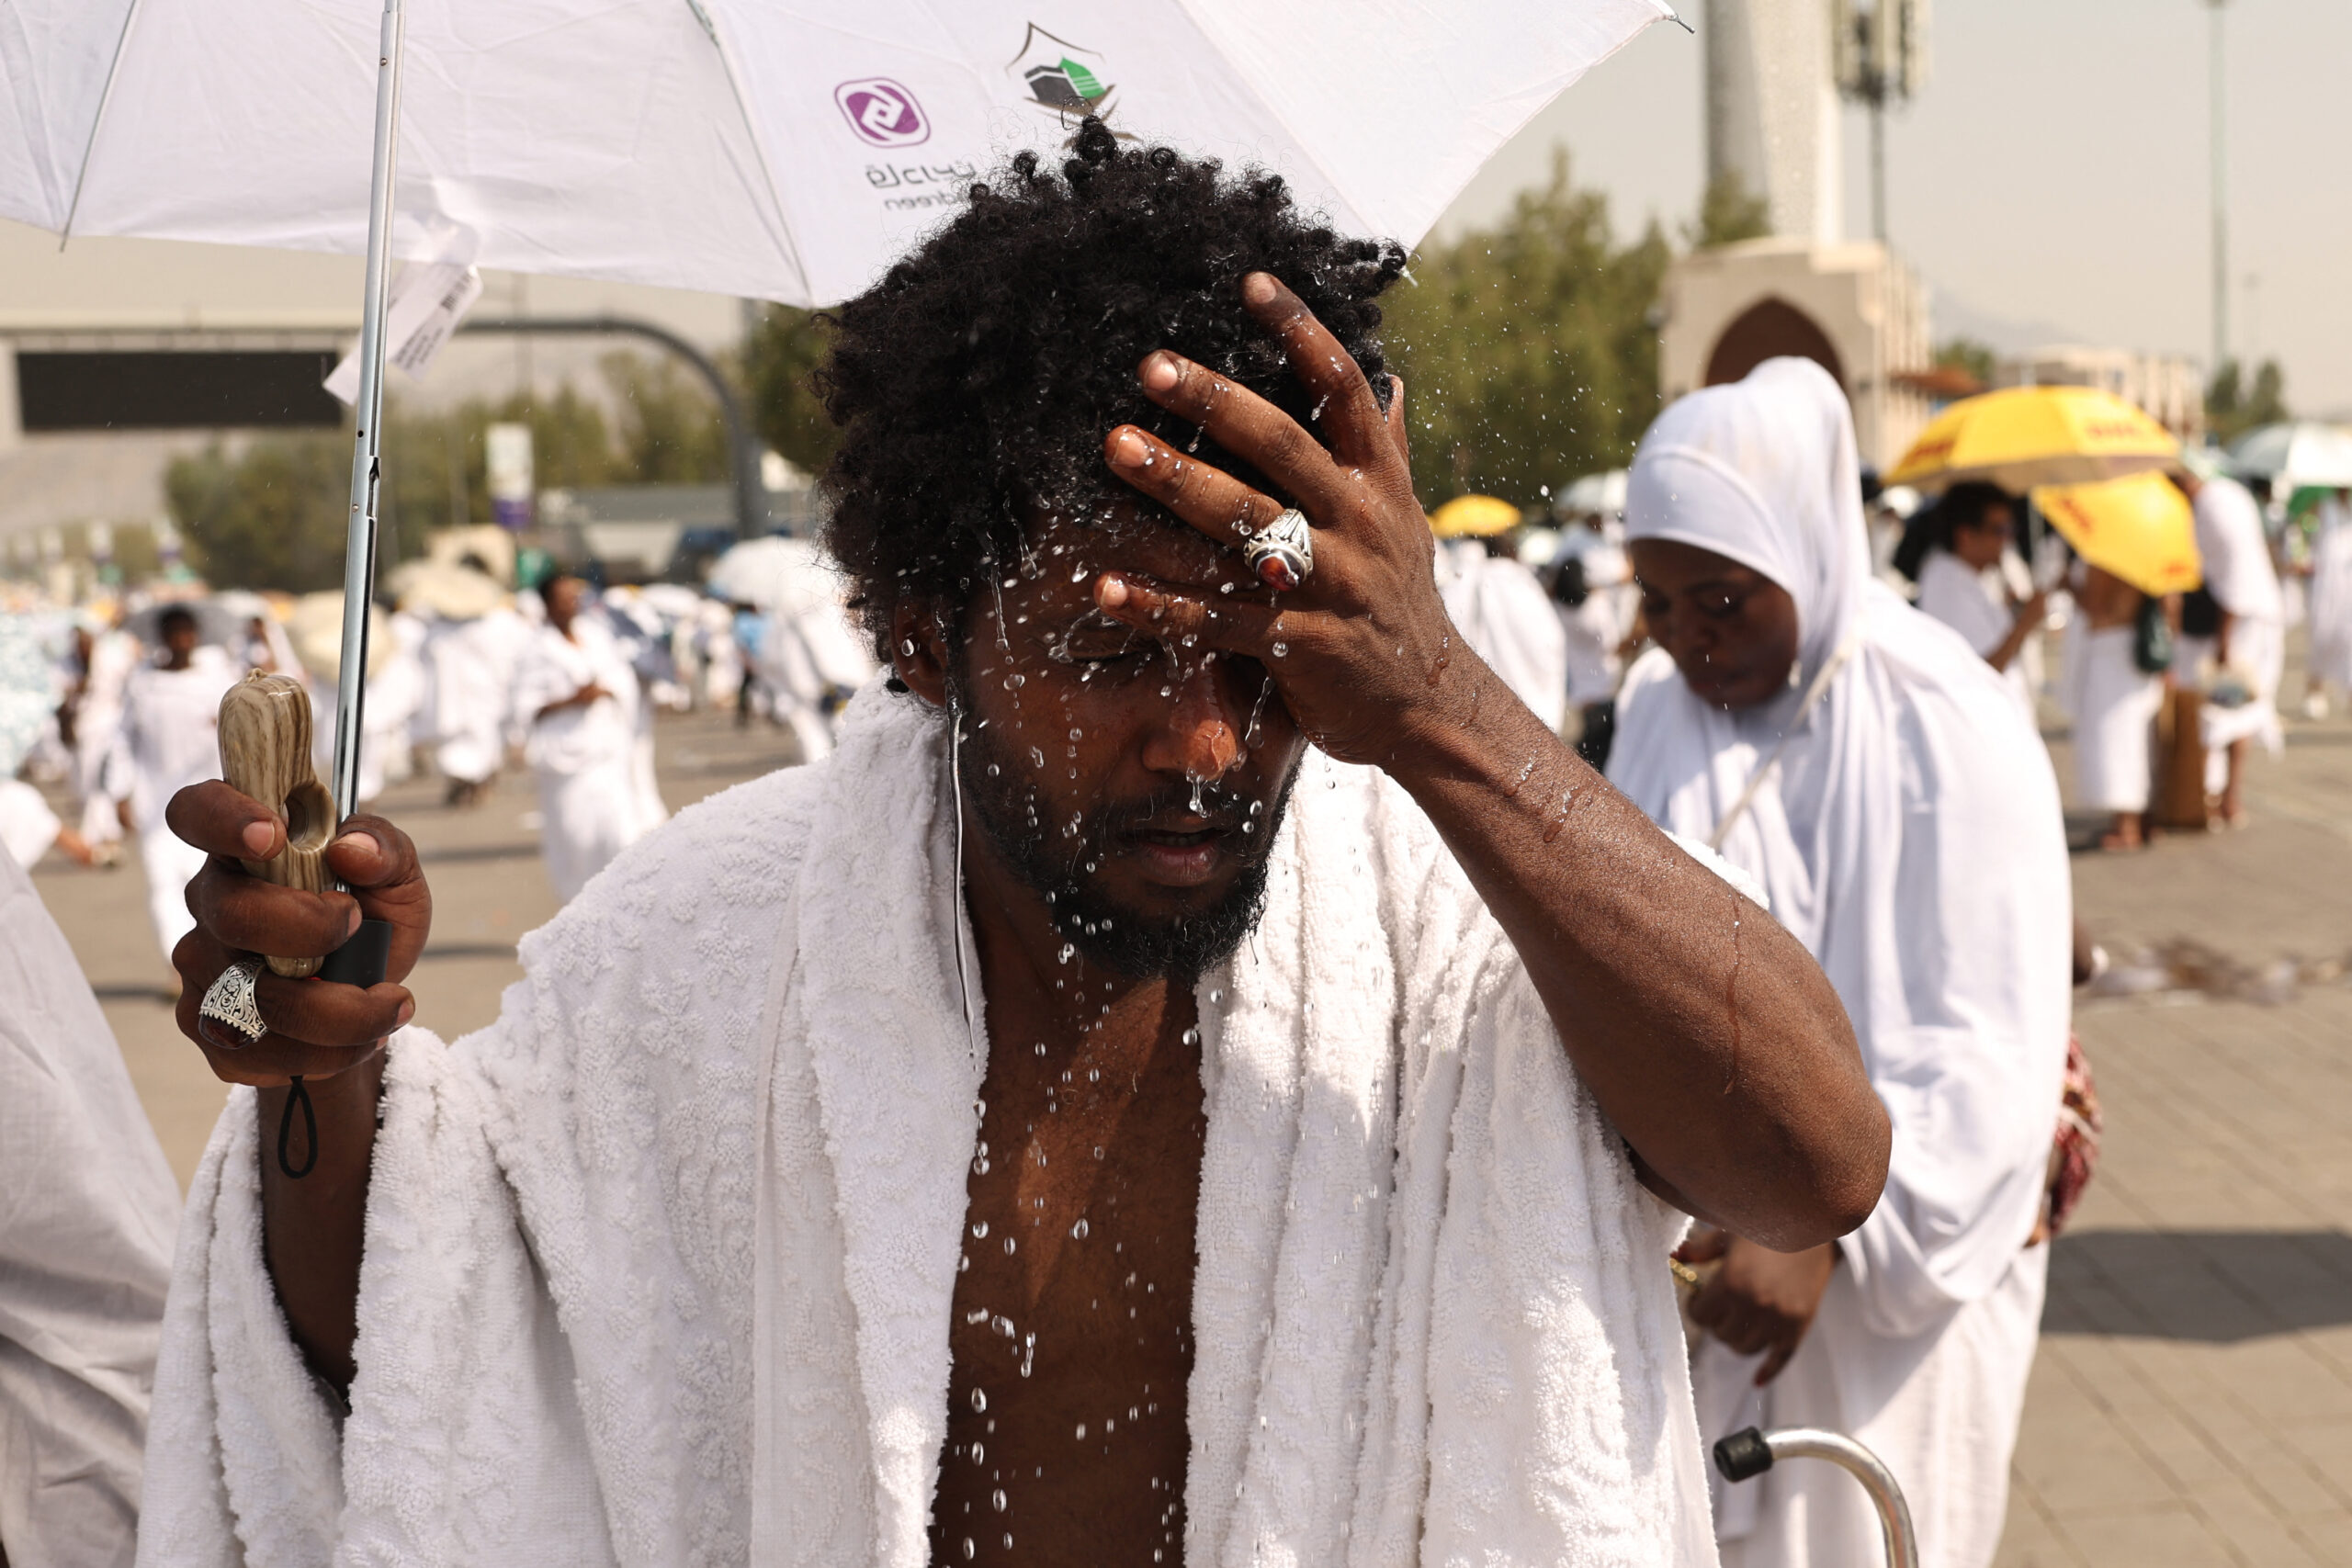 Death toll from Hajj heat wave surpasses 900